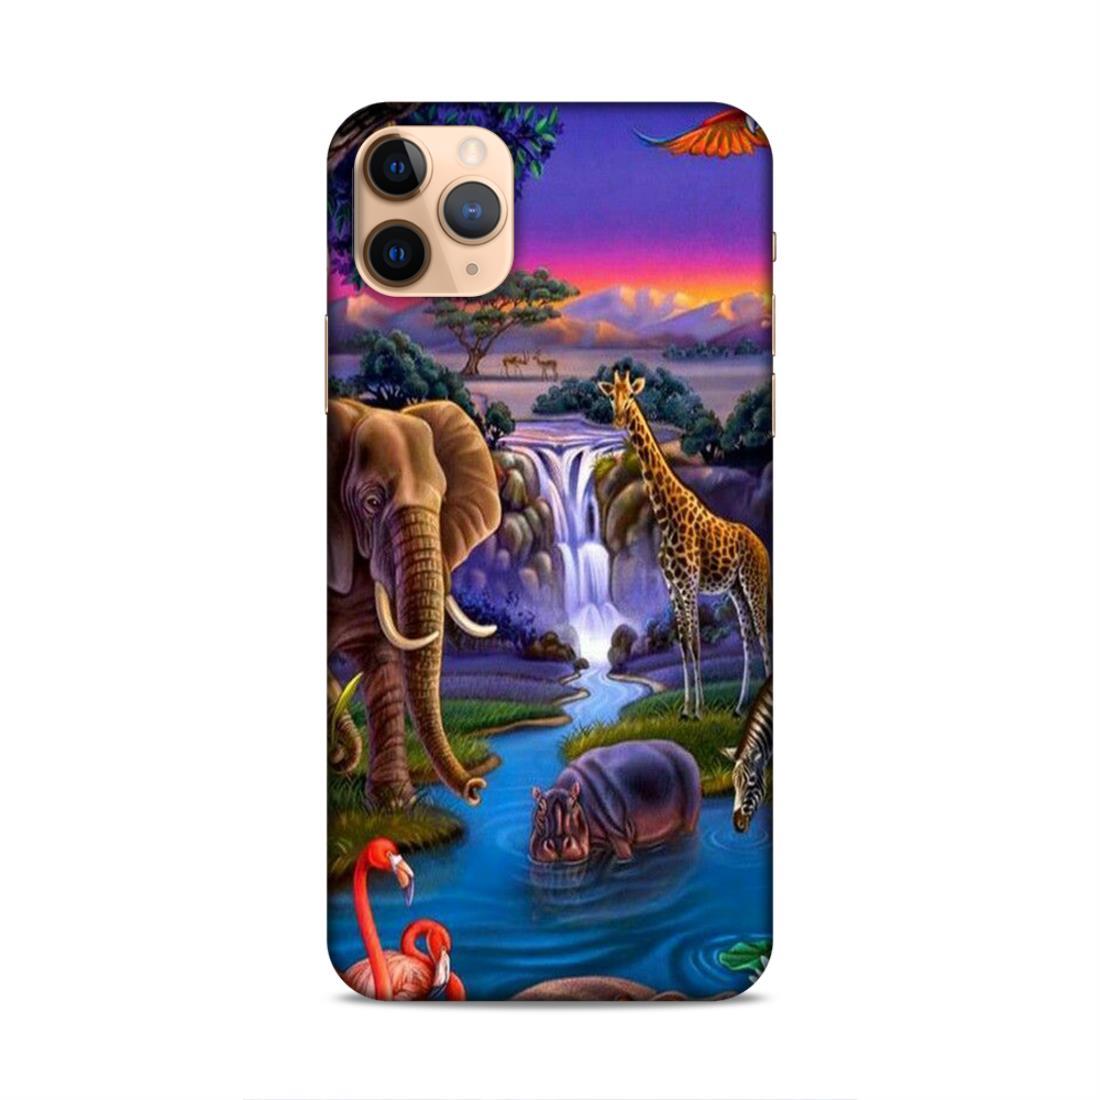 Jungle Art iPhone 11 Pro Mobile Cover